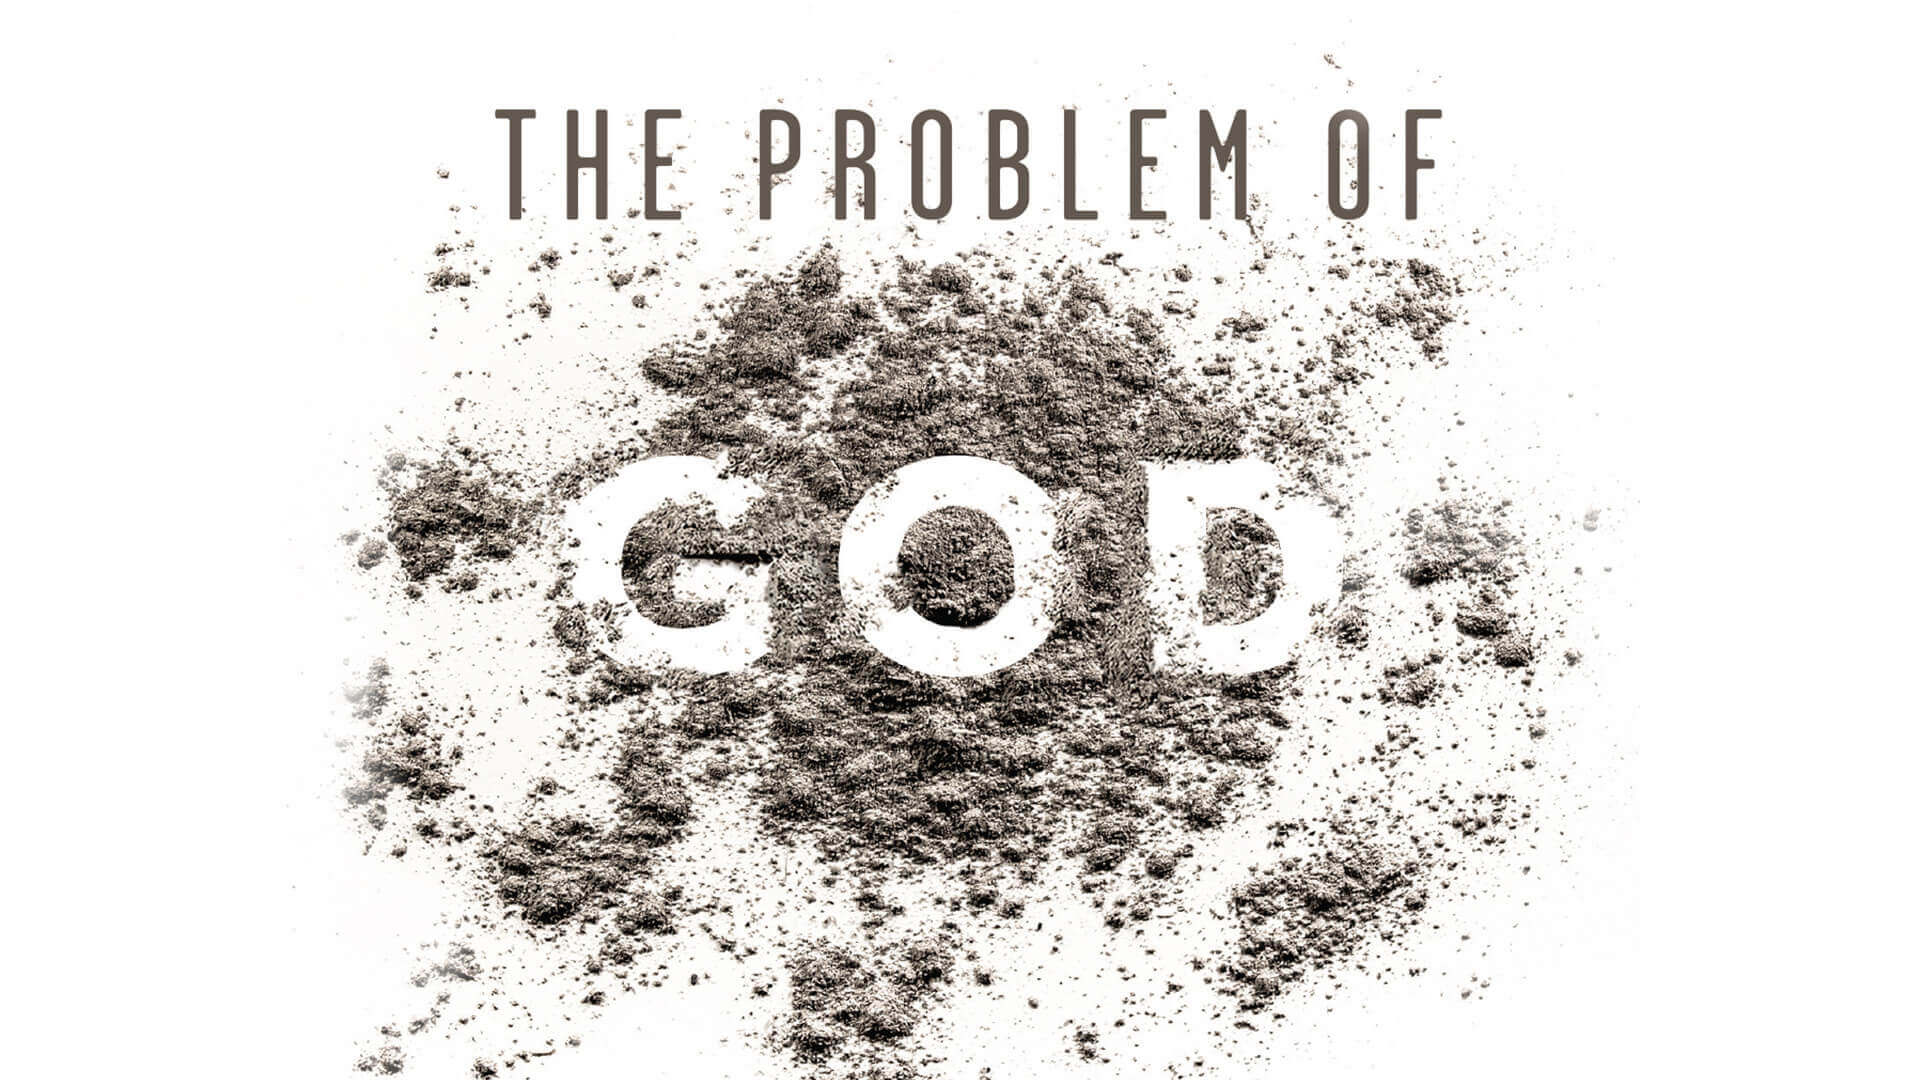 The Problem of God